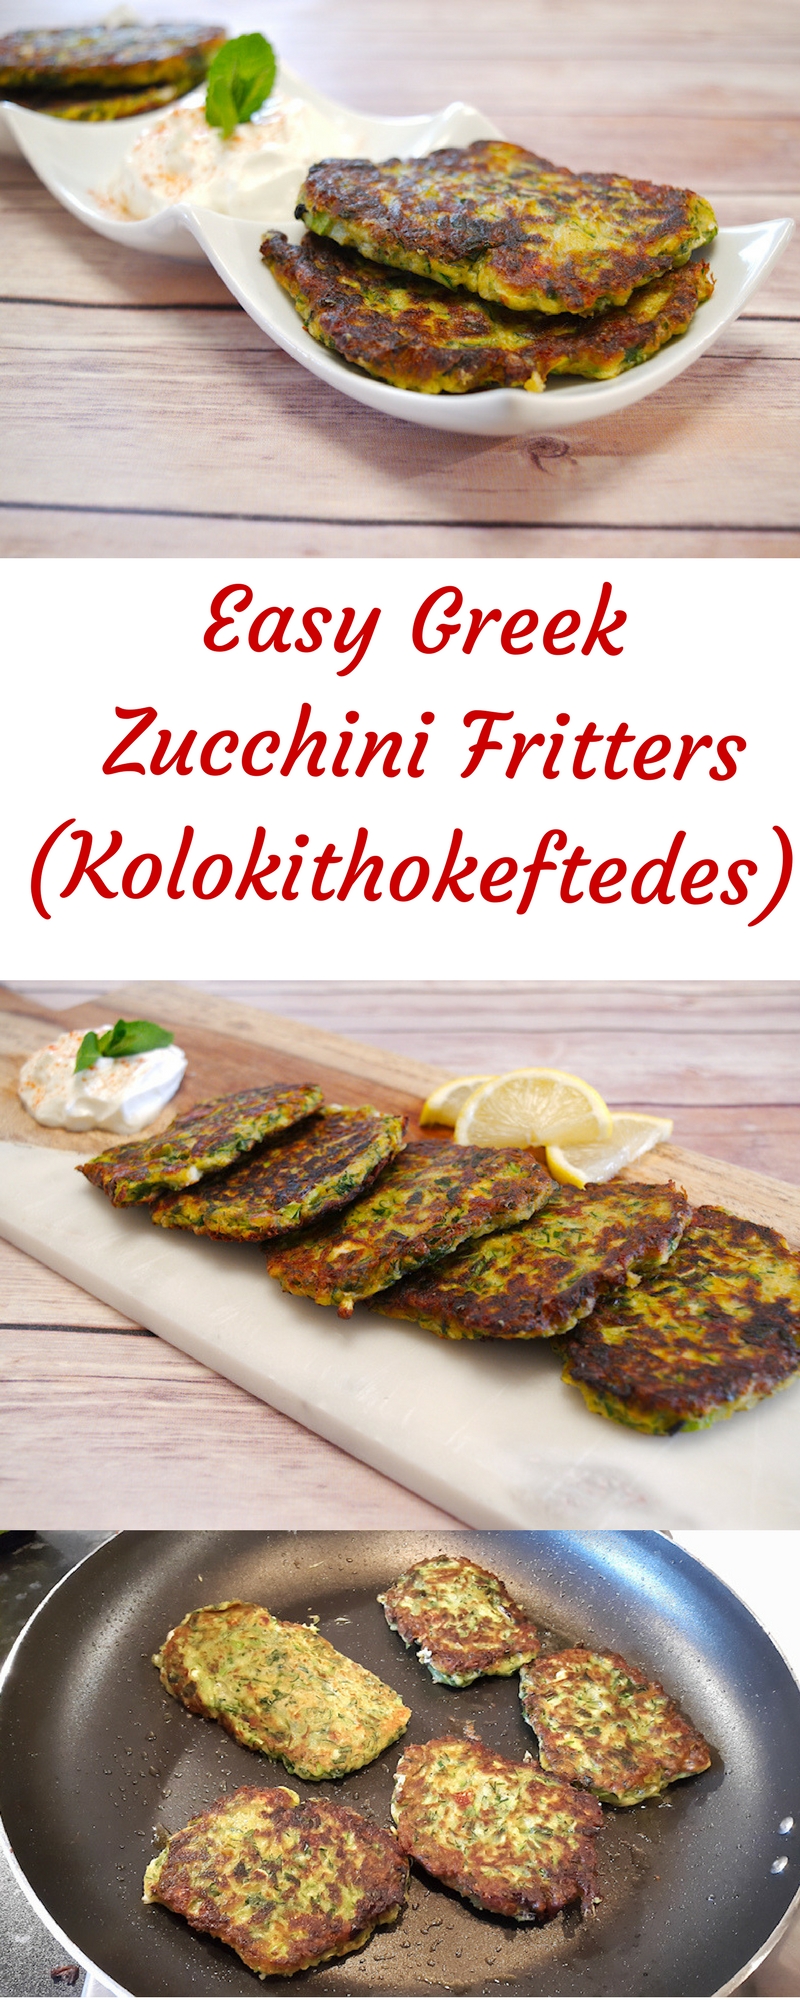 Easy Greek Zucchini Fritters (Kolokithokeftedes)